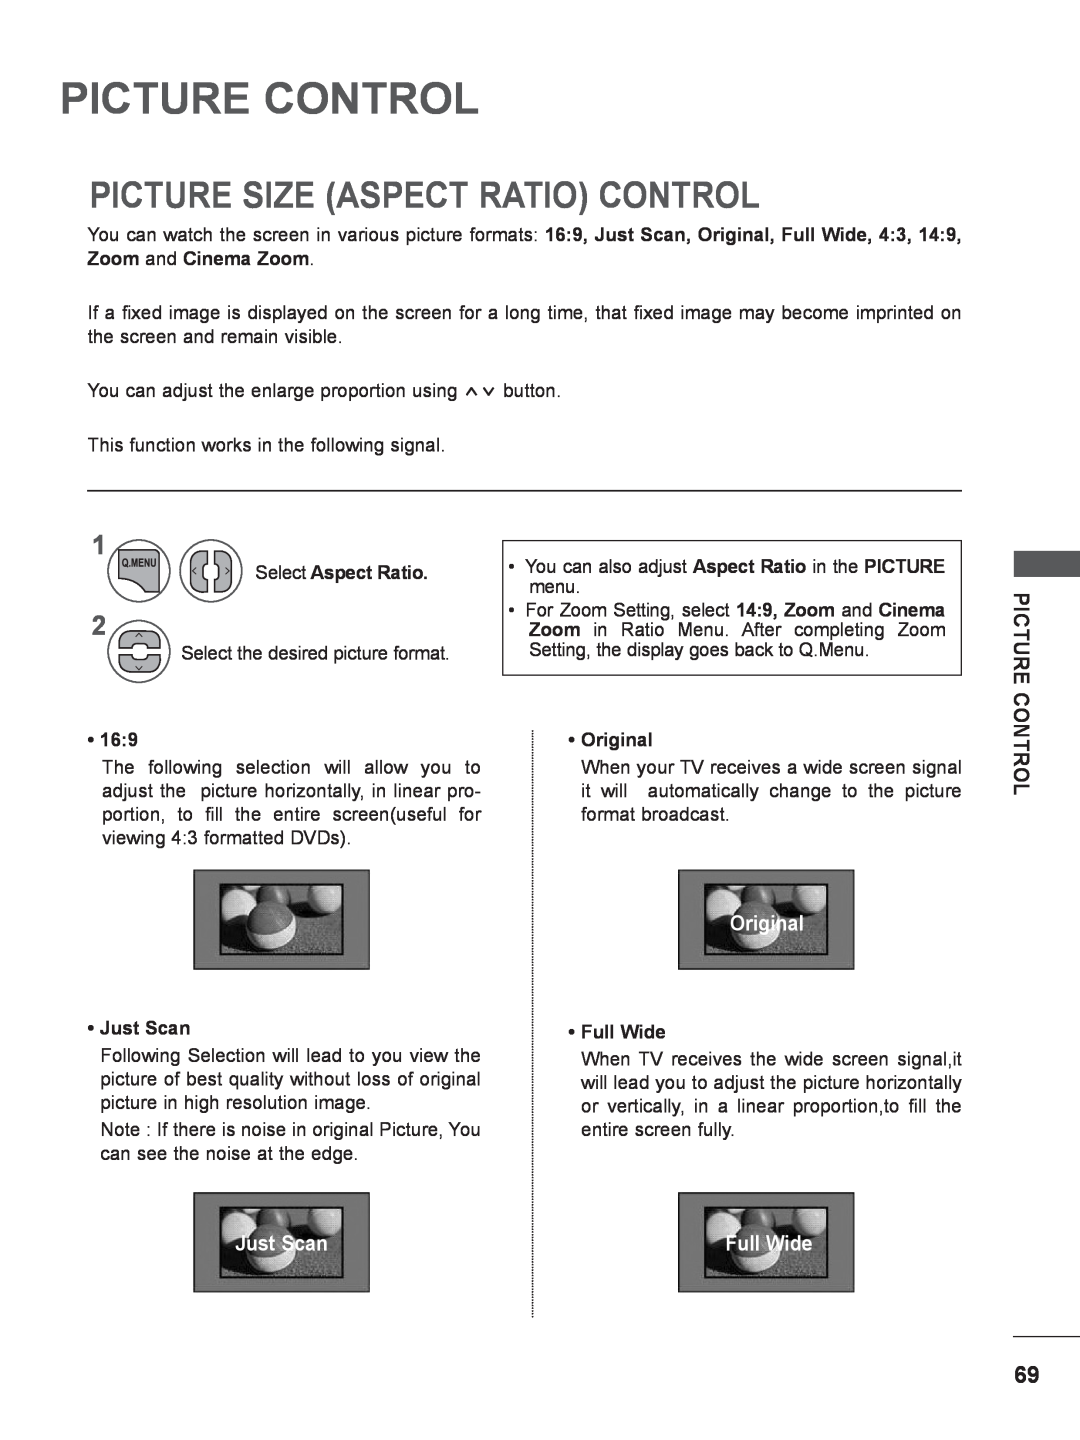 LG Electronics M2080DB Picture Control, Picture Size Aspect Ratio Control, Original, Just Scan, Select Aspect Ratio 